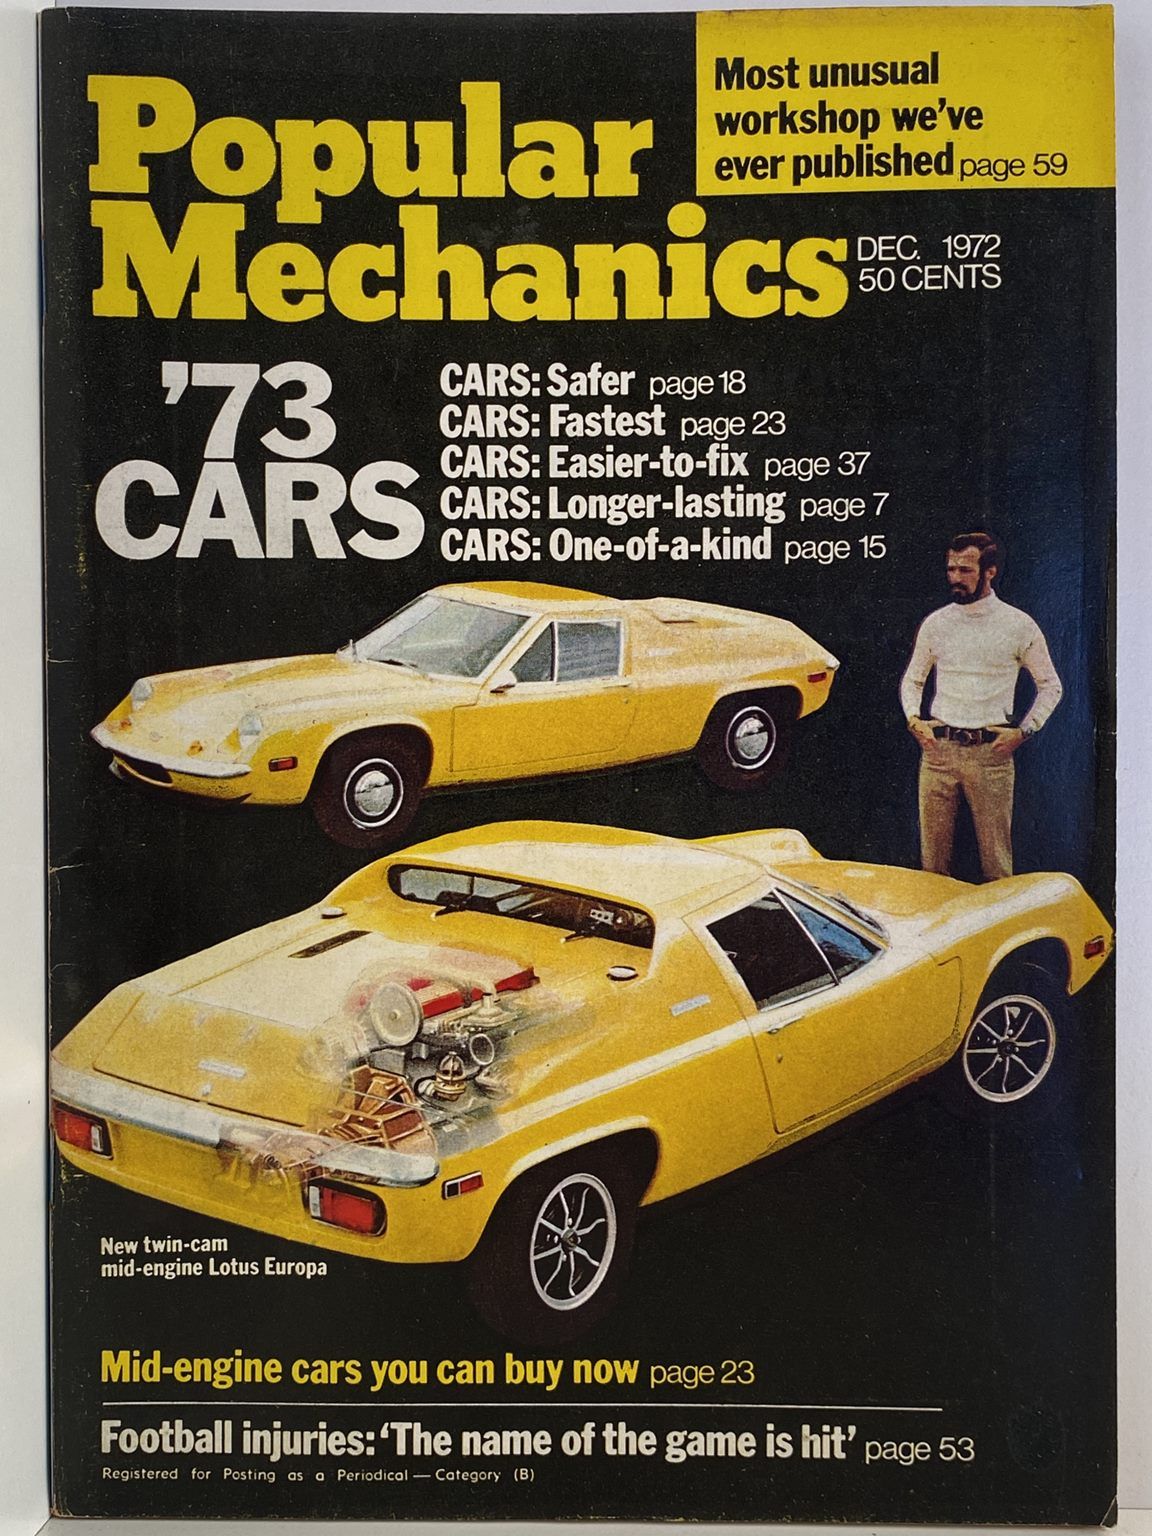 VINTAGE MAGAZINE: Popular Mechanics - Vol. 138, No. 4 - December 1972